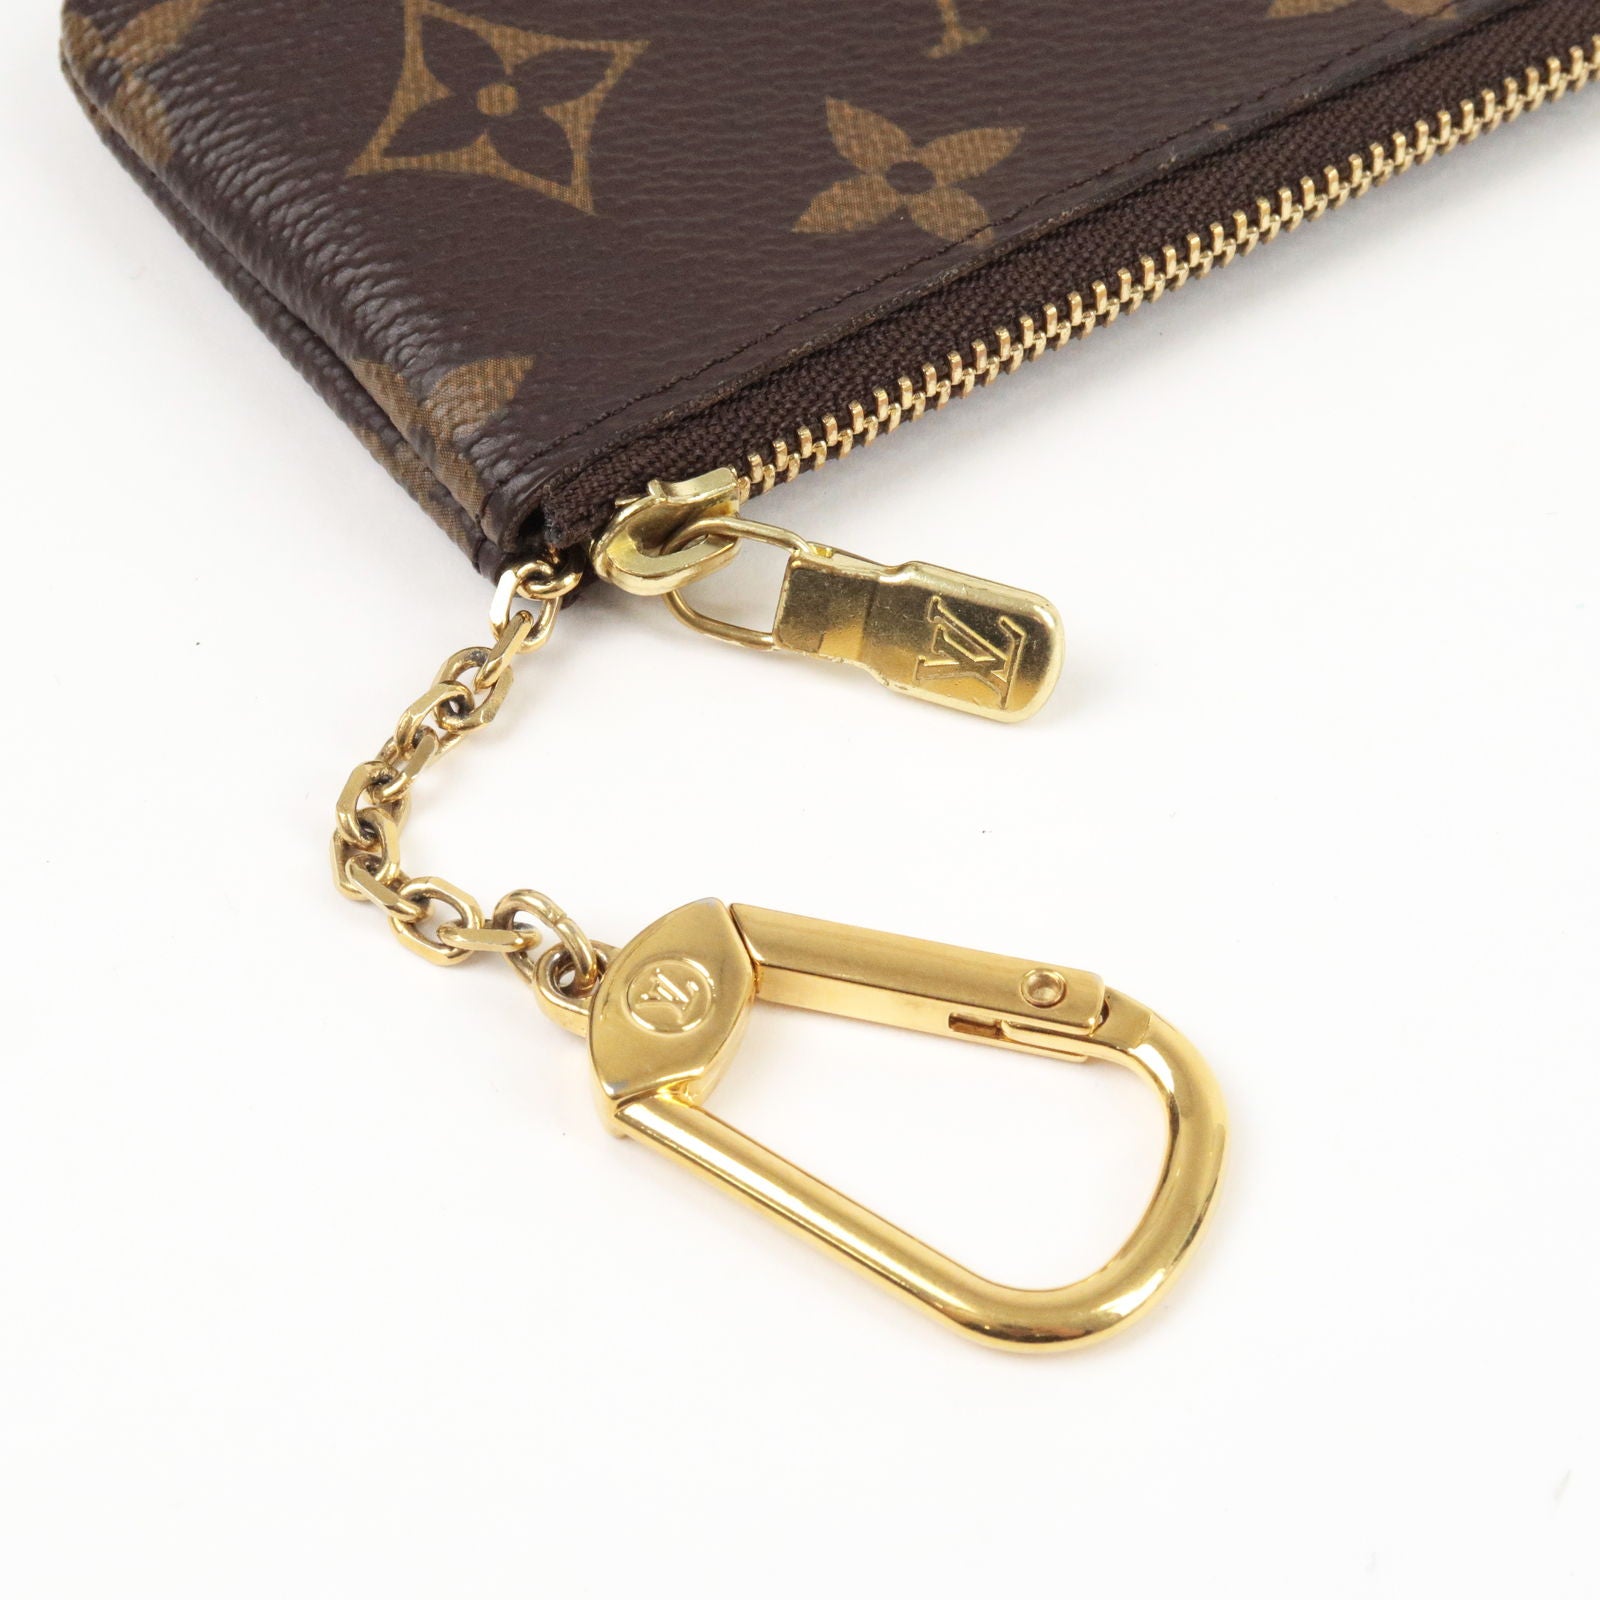 Louis Vuitton Key Pouch Vuittonite Monogram